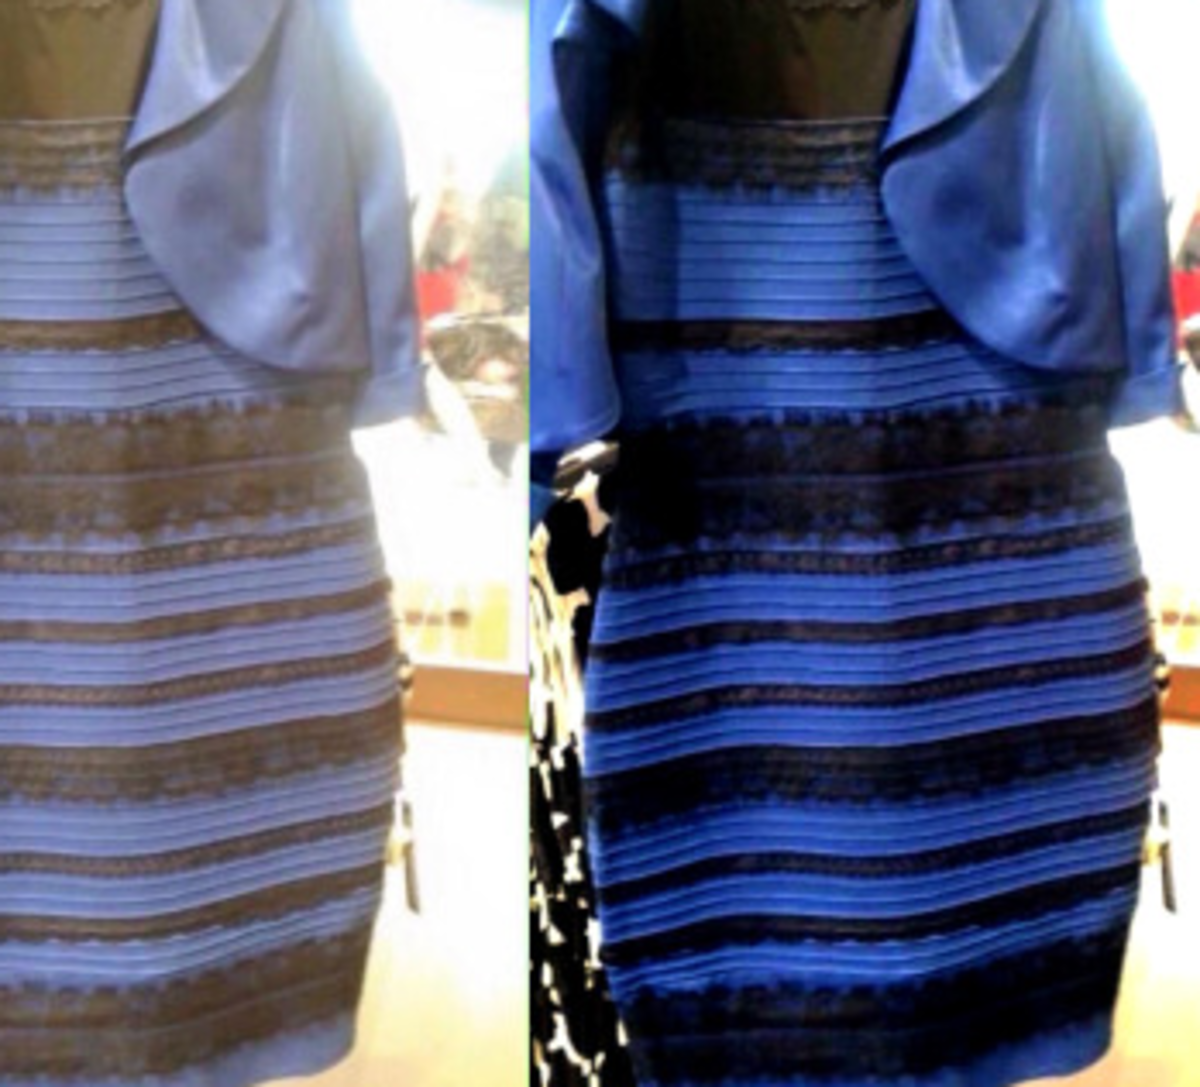 The white/gold or black/blue viral dress.